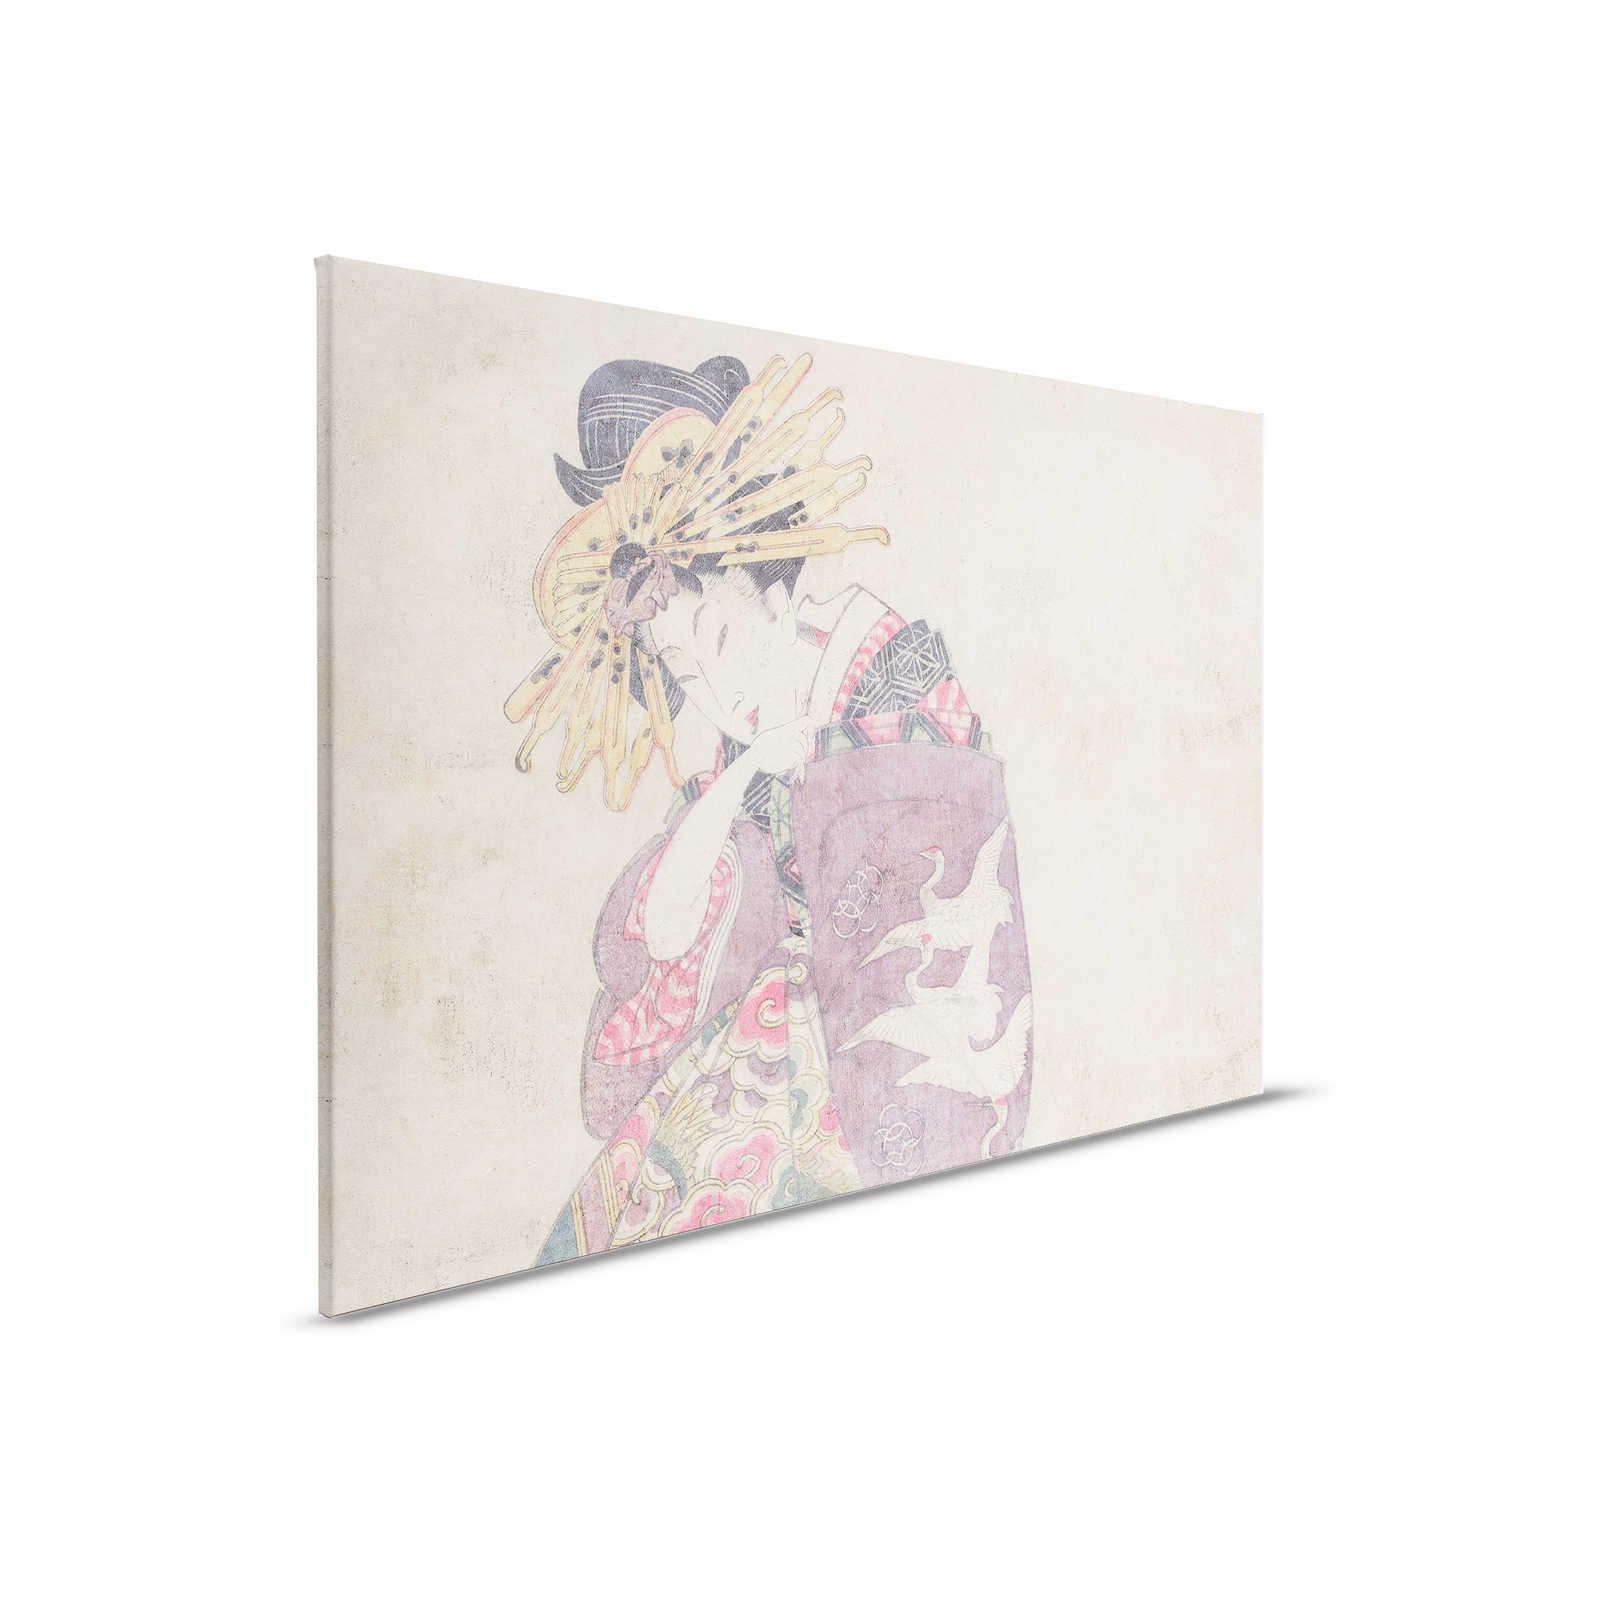 Osaka 1 - Kunstdruk Canvas schilderij Aziatische Decor Vintage Stijl - 0,90 m x 0,60 m
